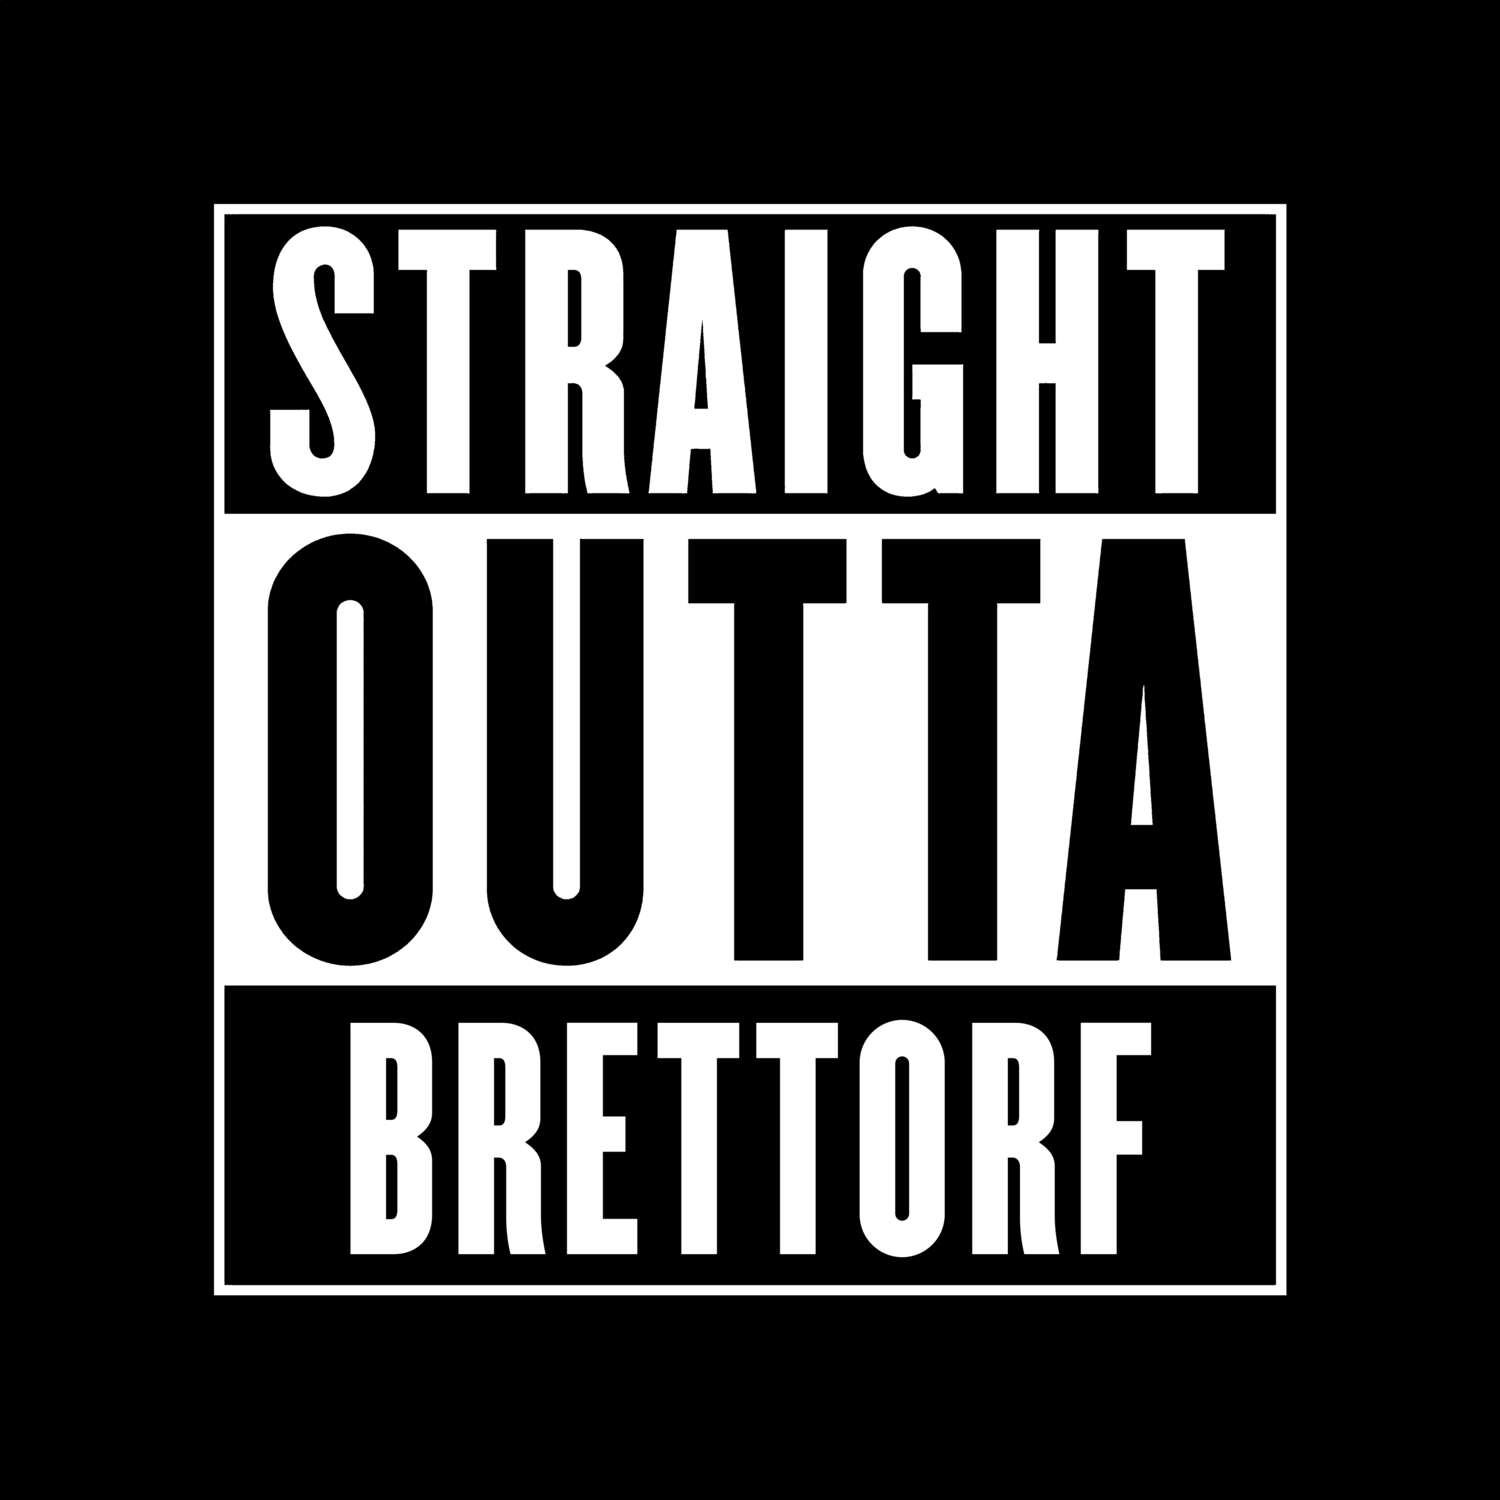 Brettorf T-Shirt »Straight Outta«